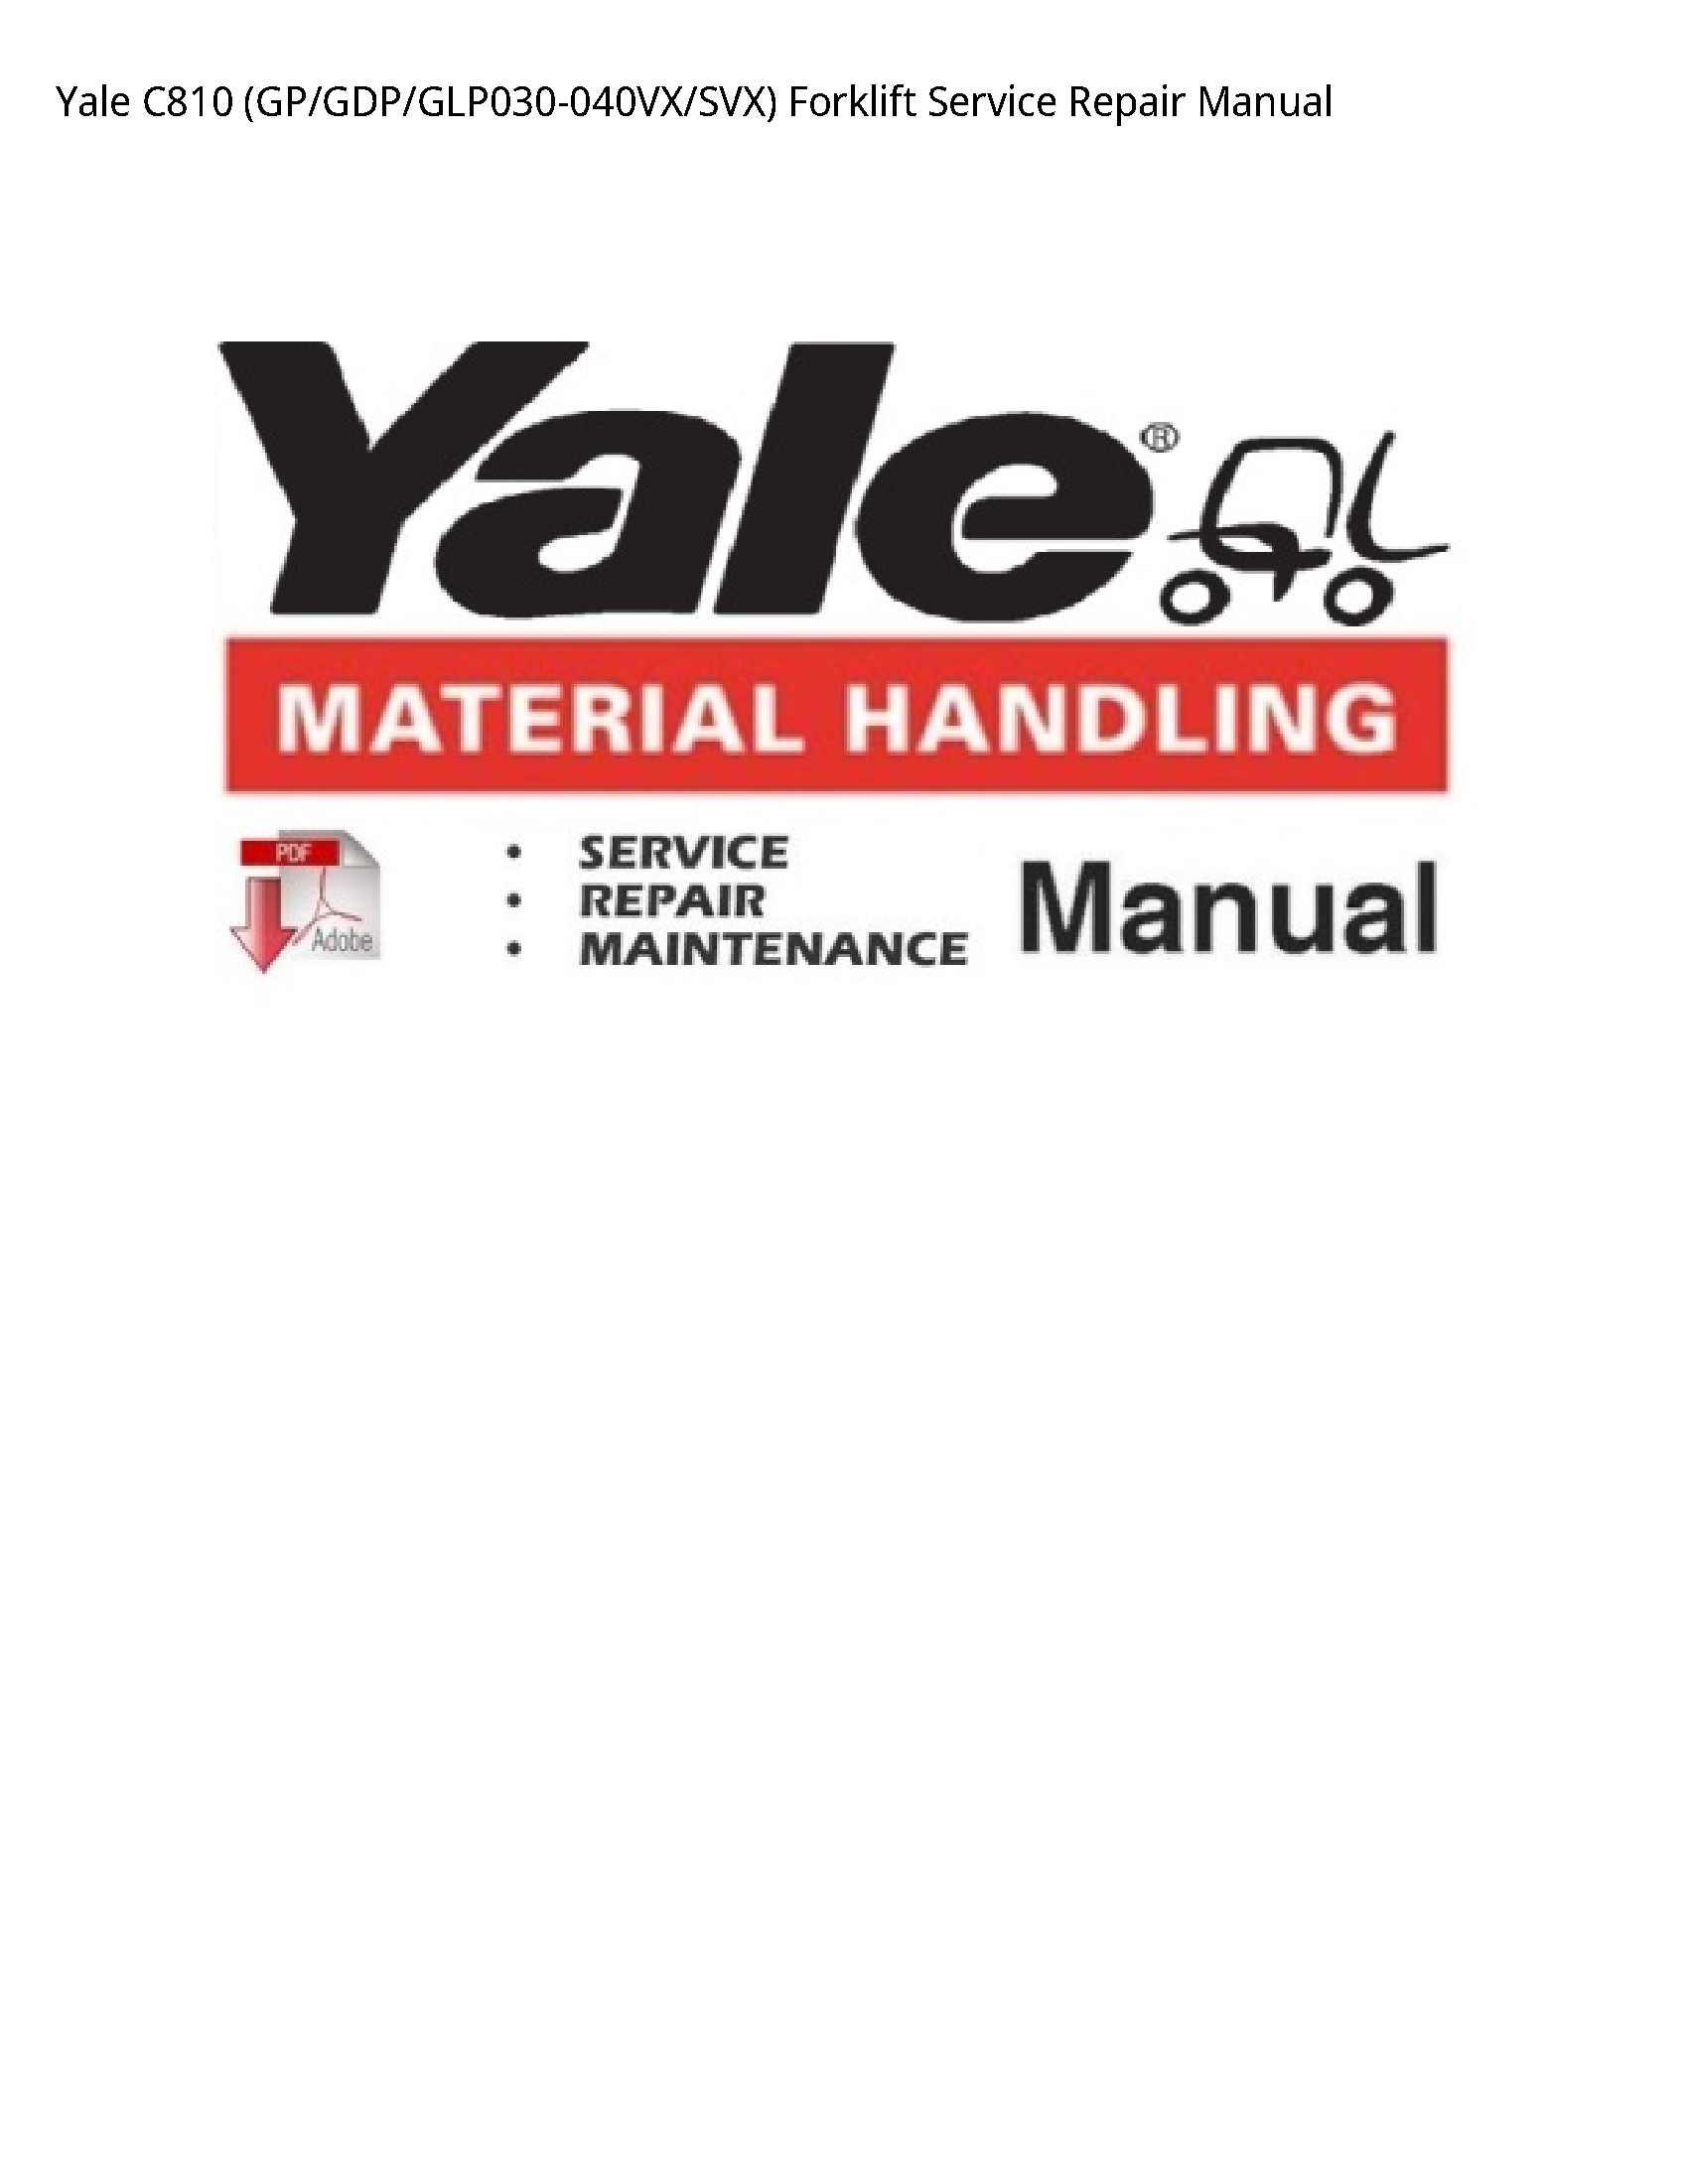 Yale C810 Forklift manual